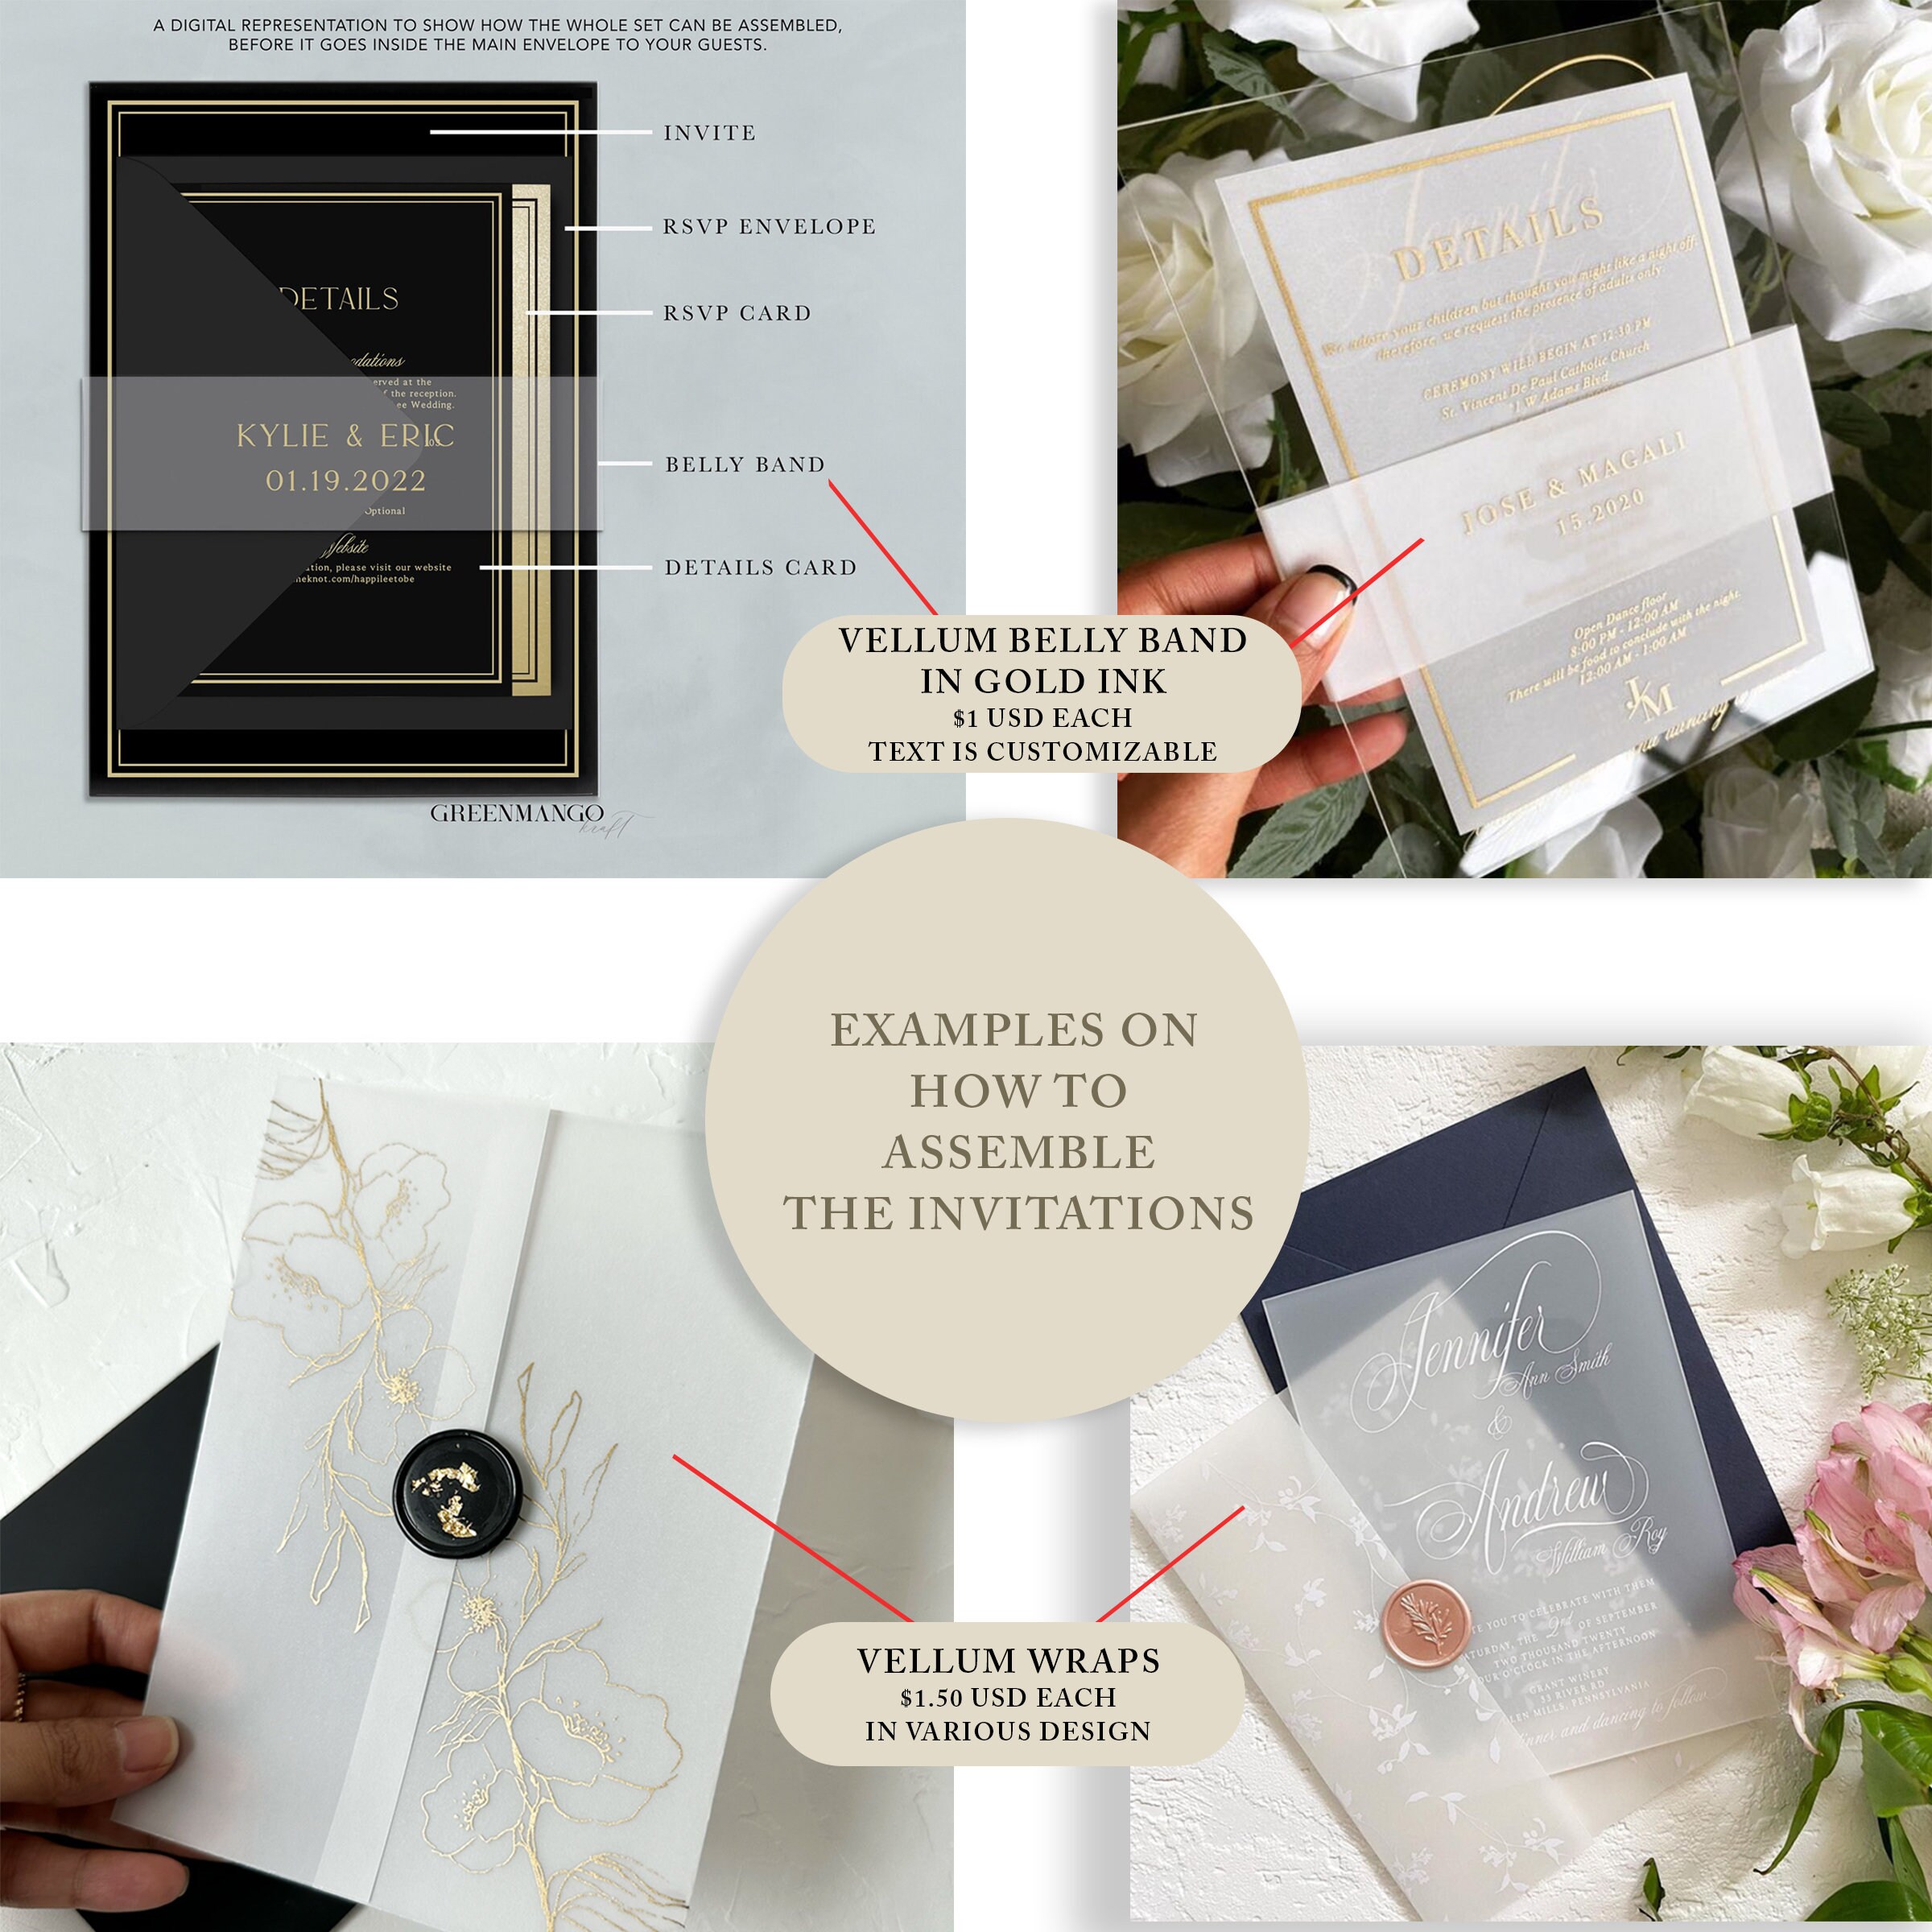 Luxury Monogram Black Acrylic Wedding Invitation with Gold Screen Printing  CAX113